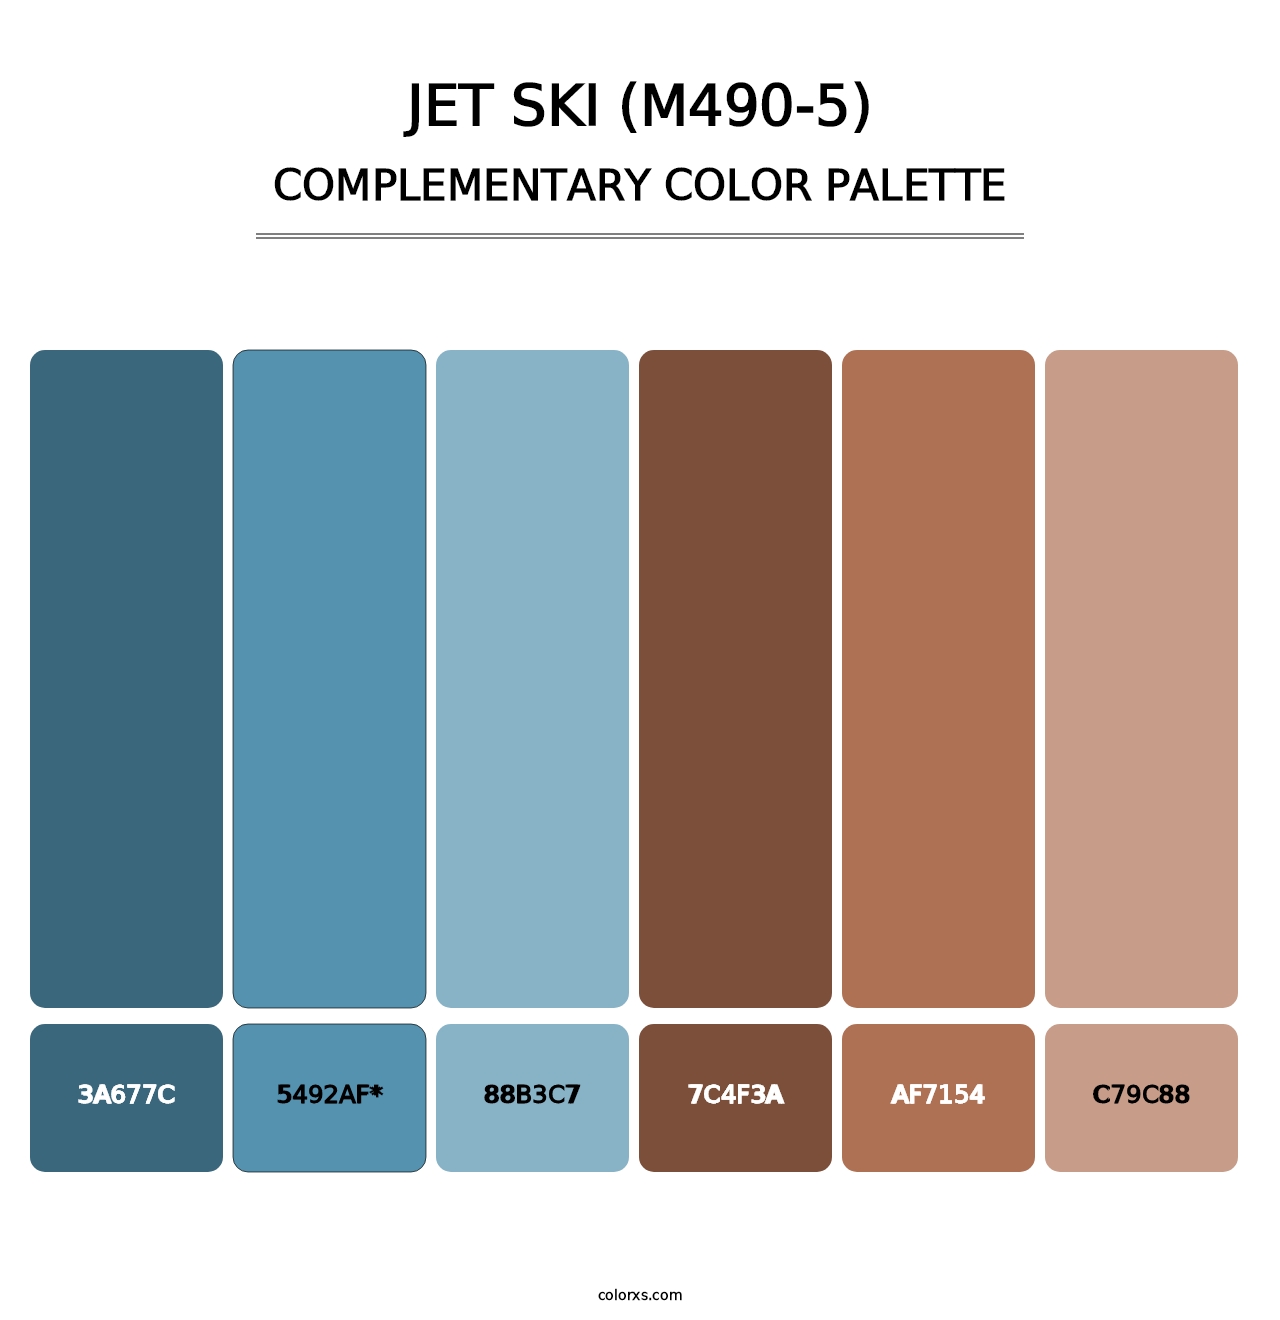 Jet Ski (M490-5) - Complementary Color Palette